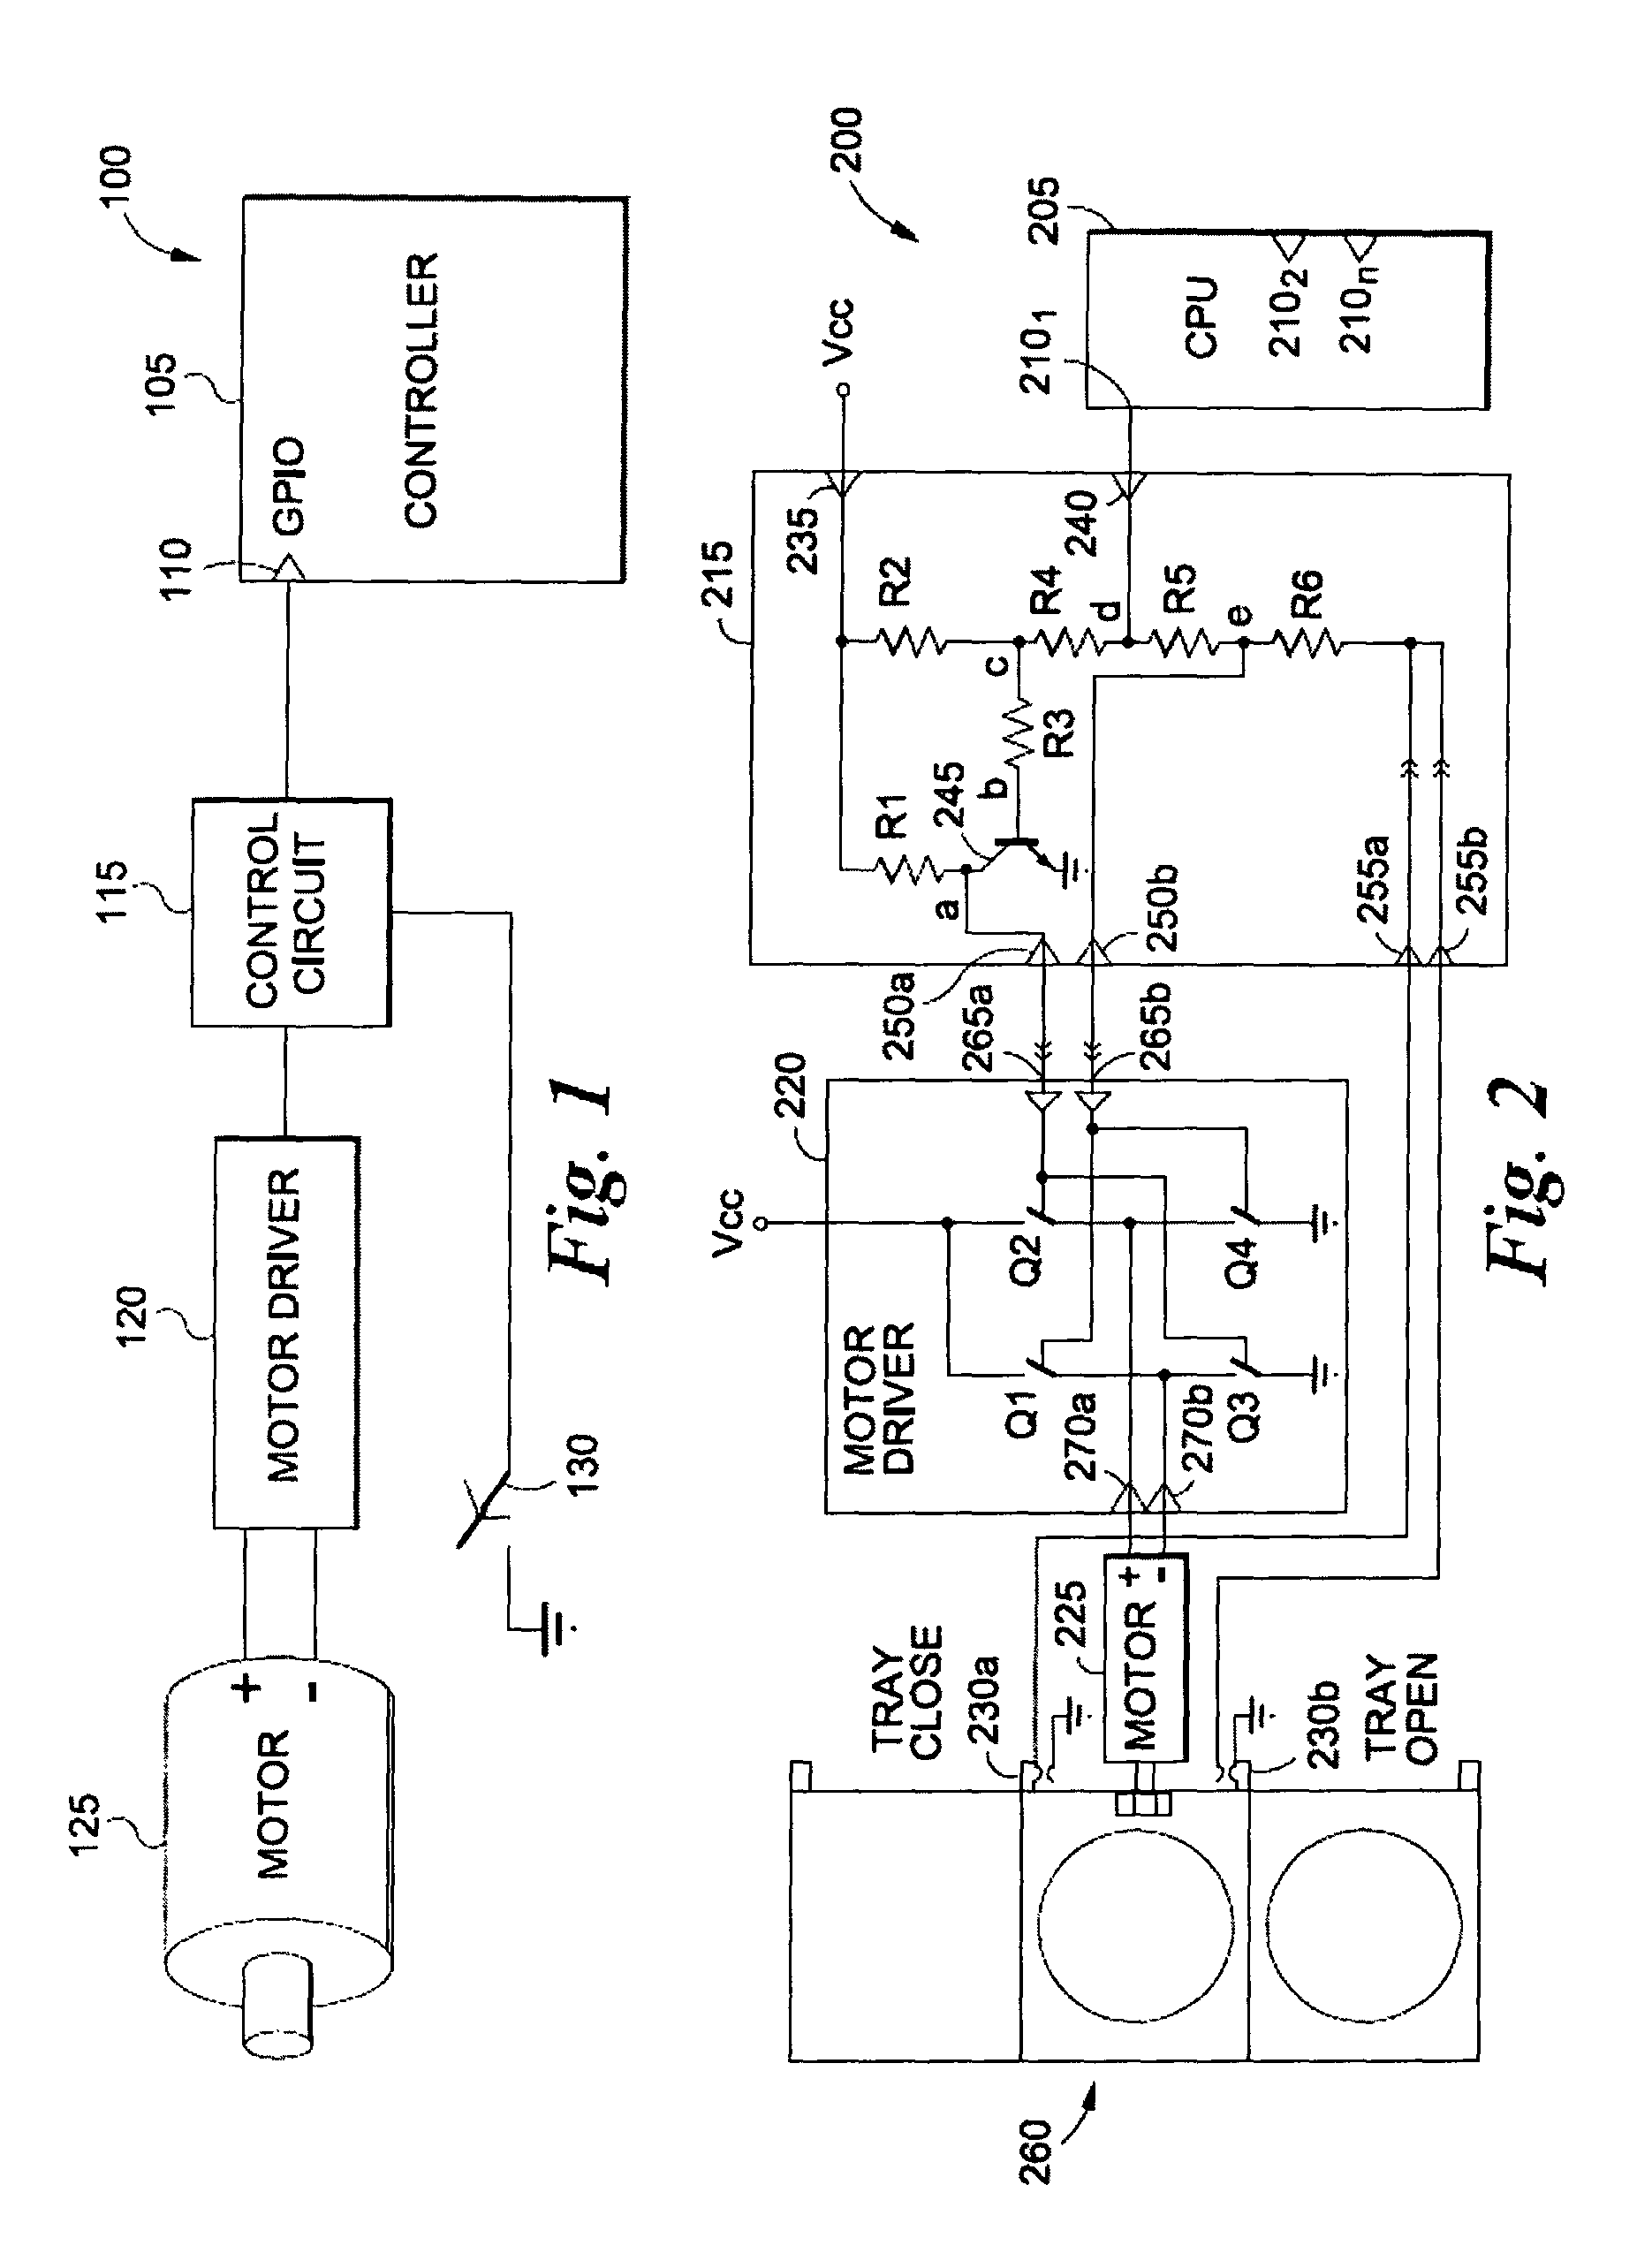 Single general purpose input/output (GPIO) pin motor control circuit